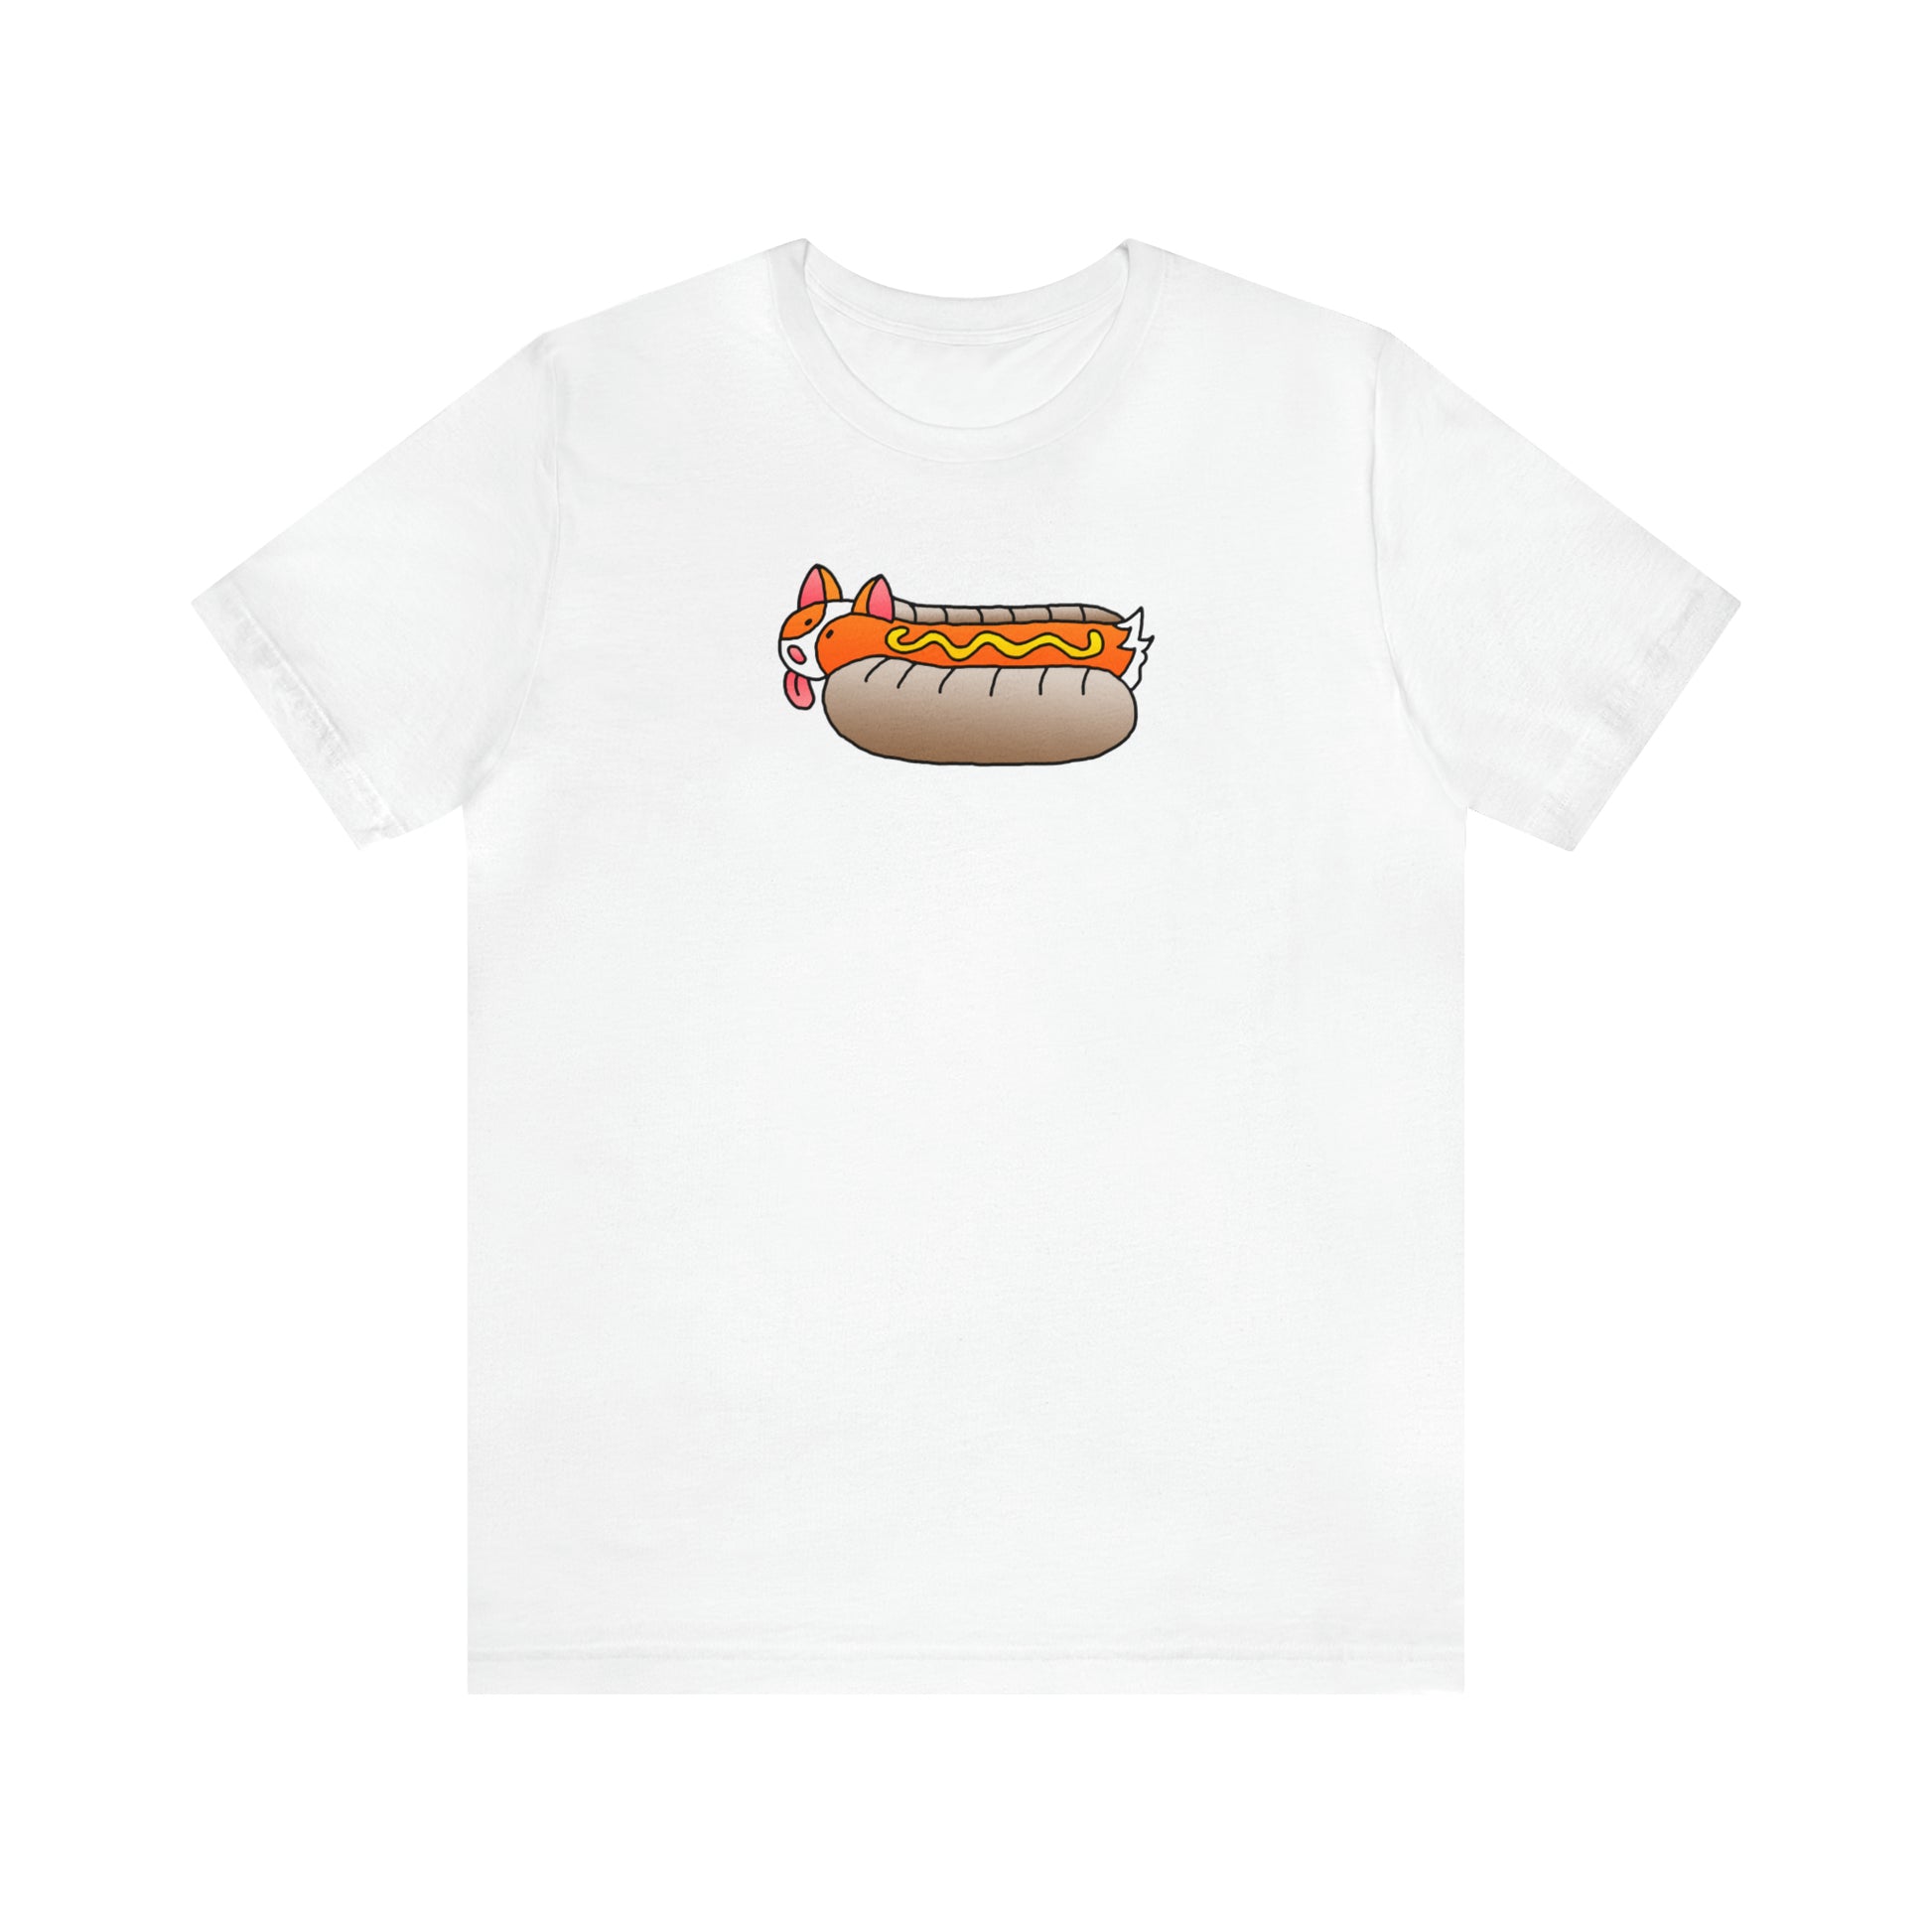 White Front ShoBeaRo logo unisex t-shirt short sleeve men women shirt corgi hot dog I saved a life